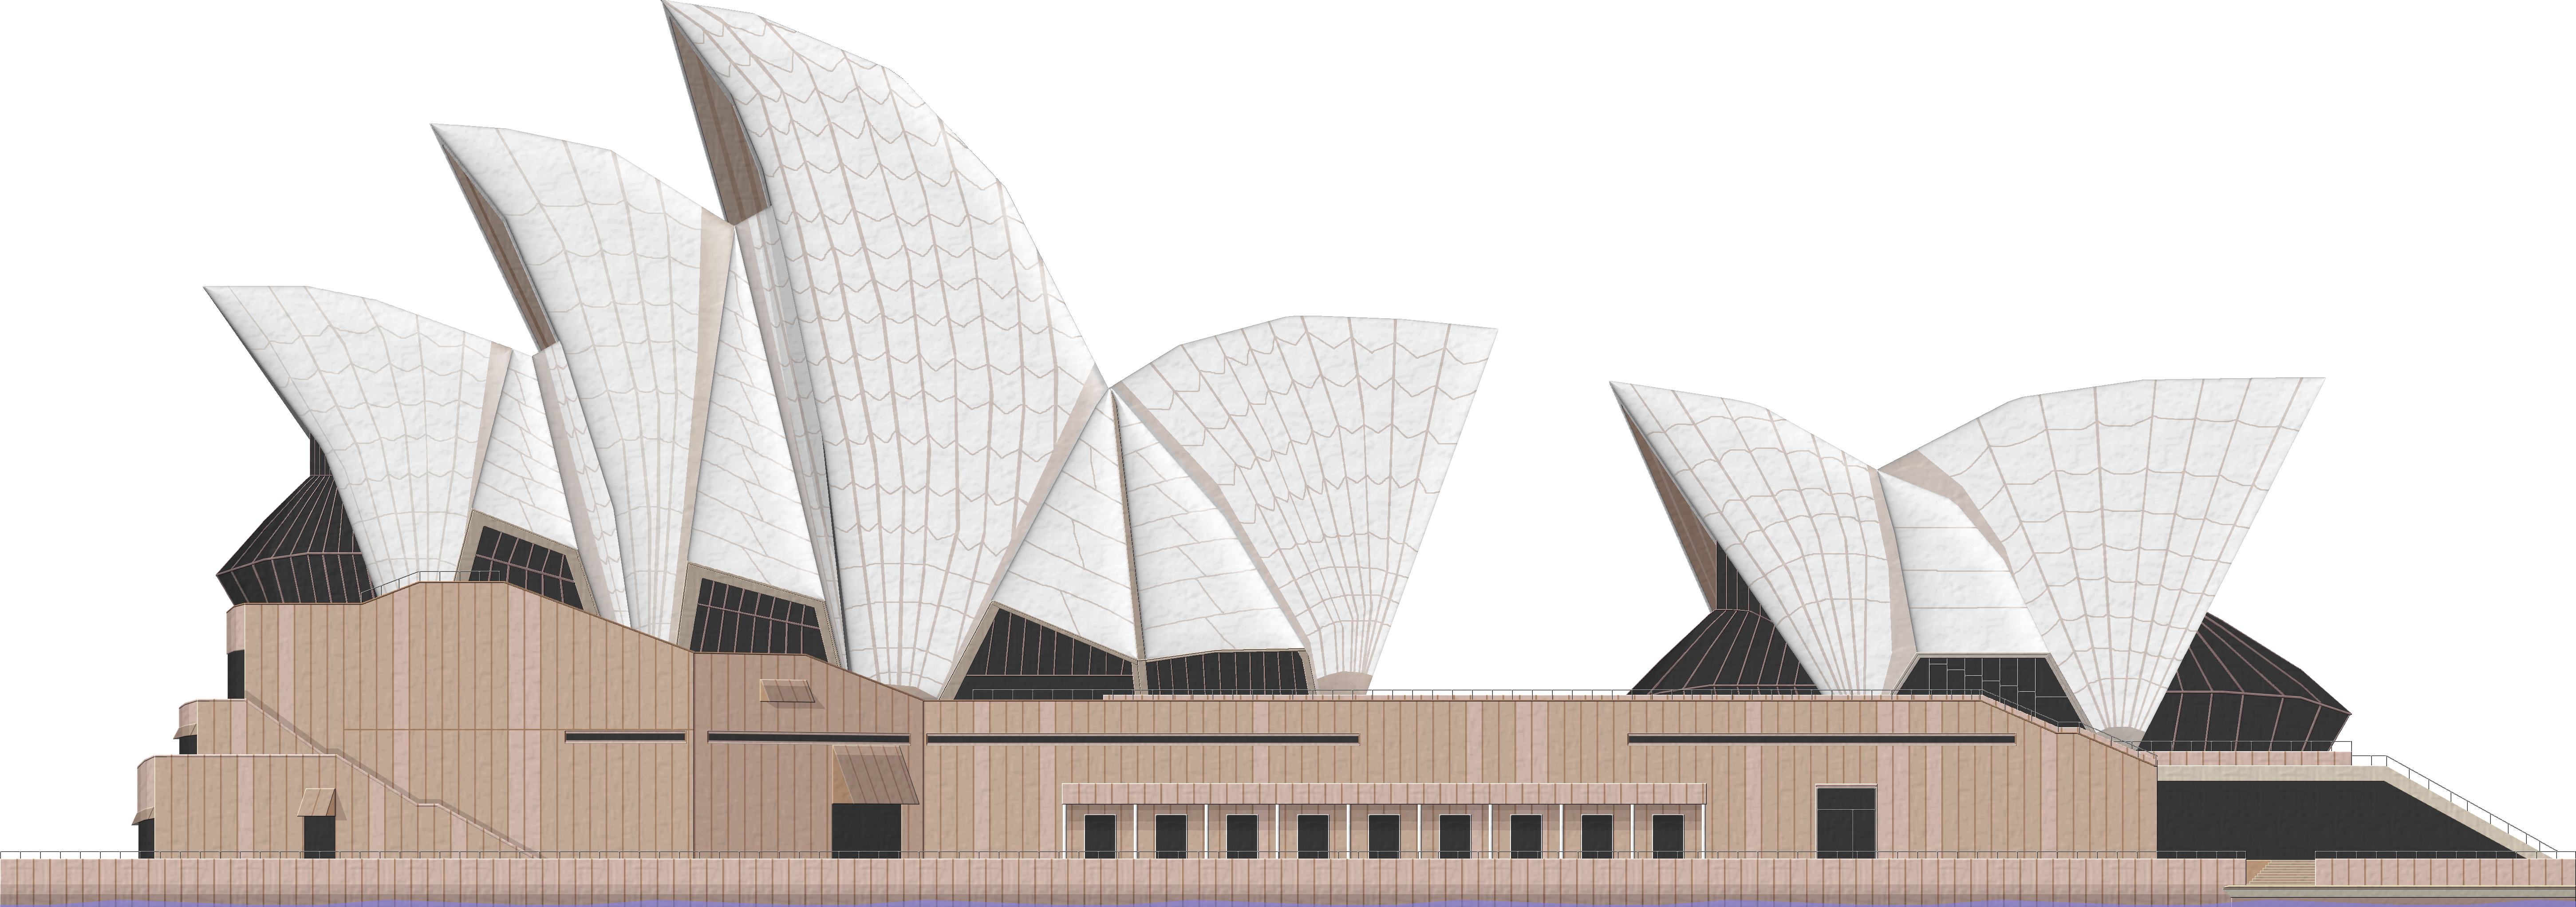 Sydney Opera House File PNG Image